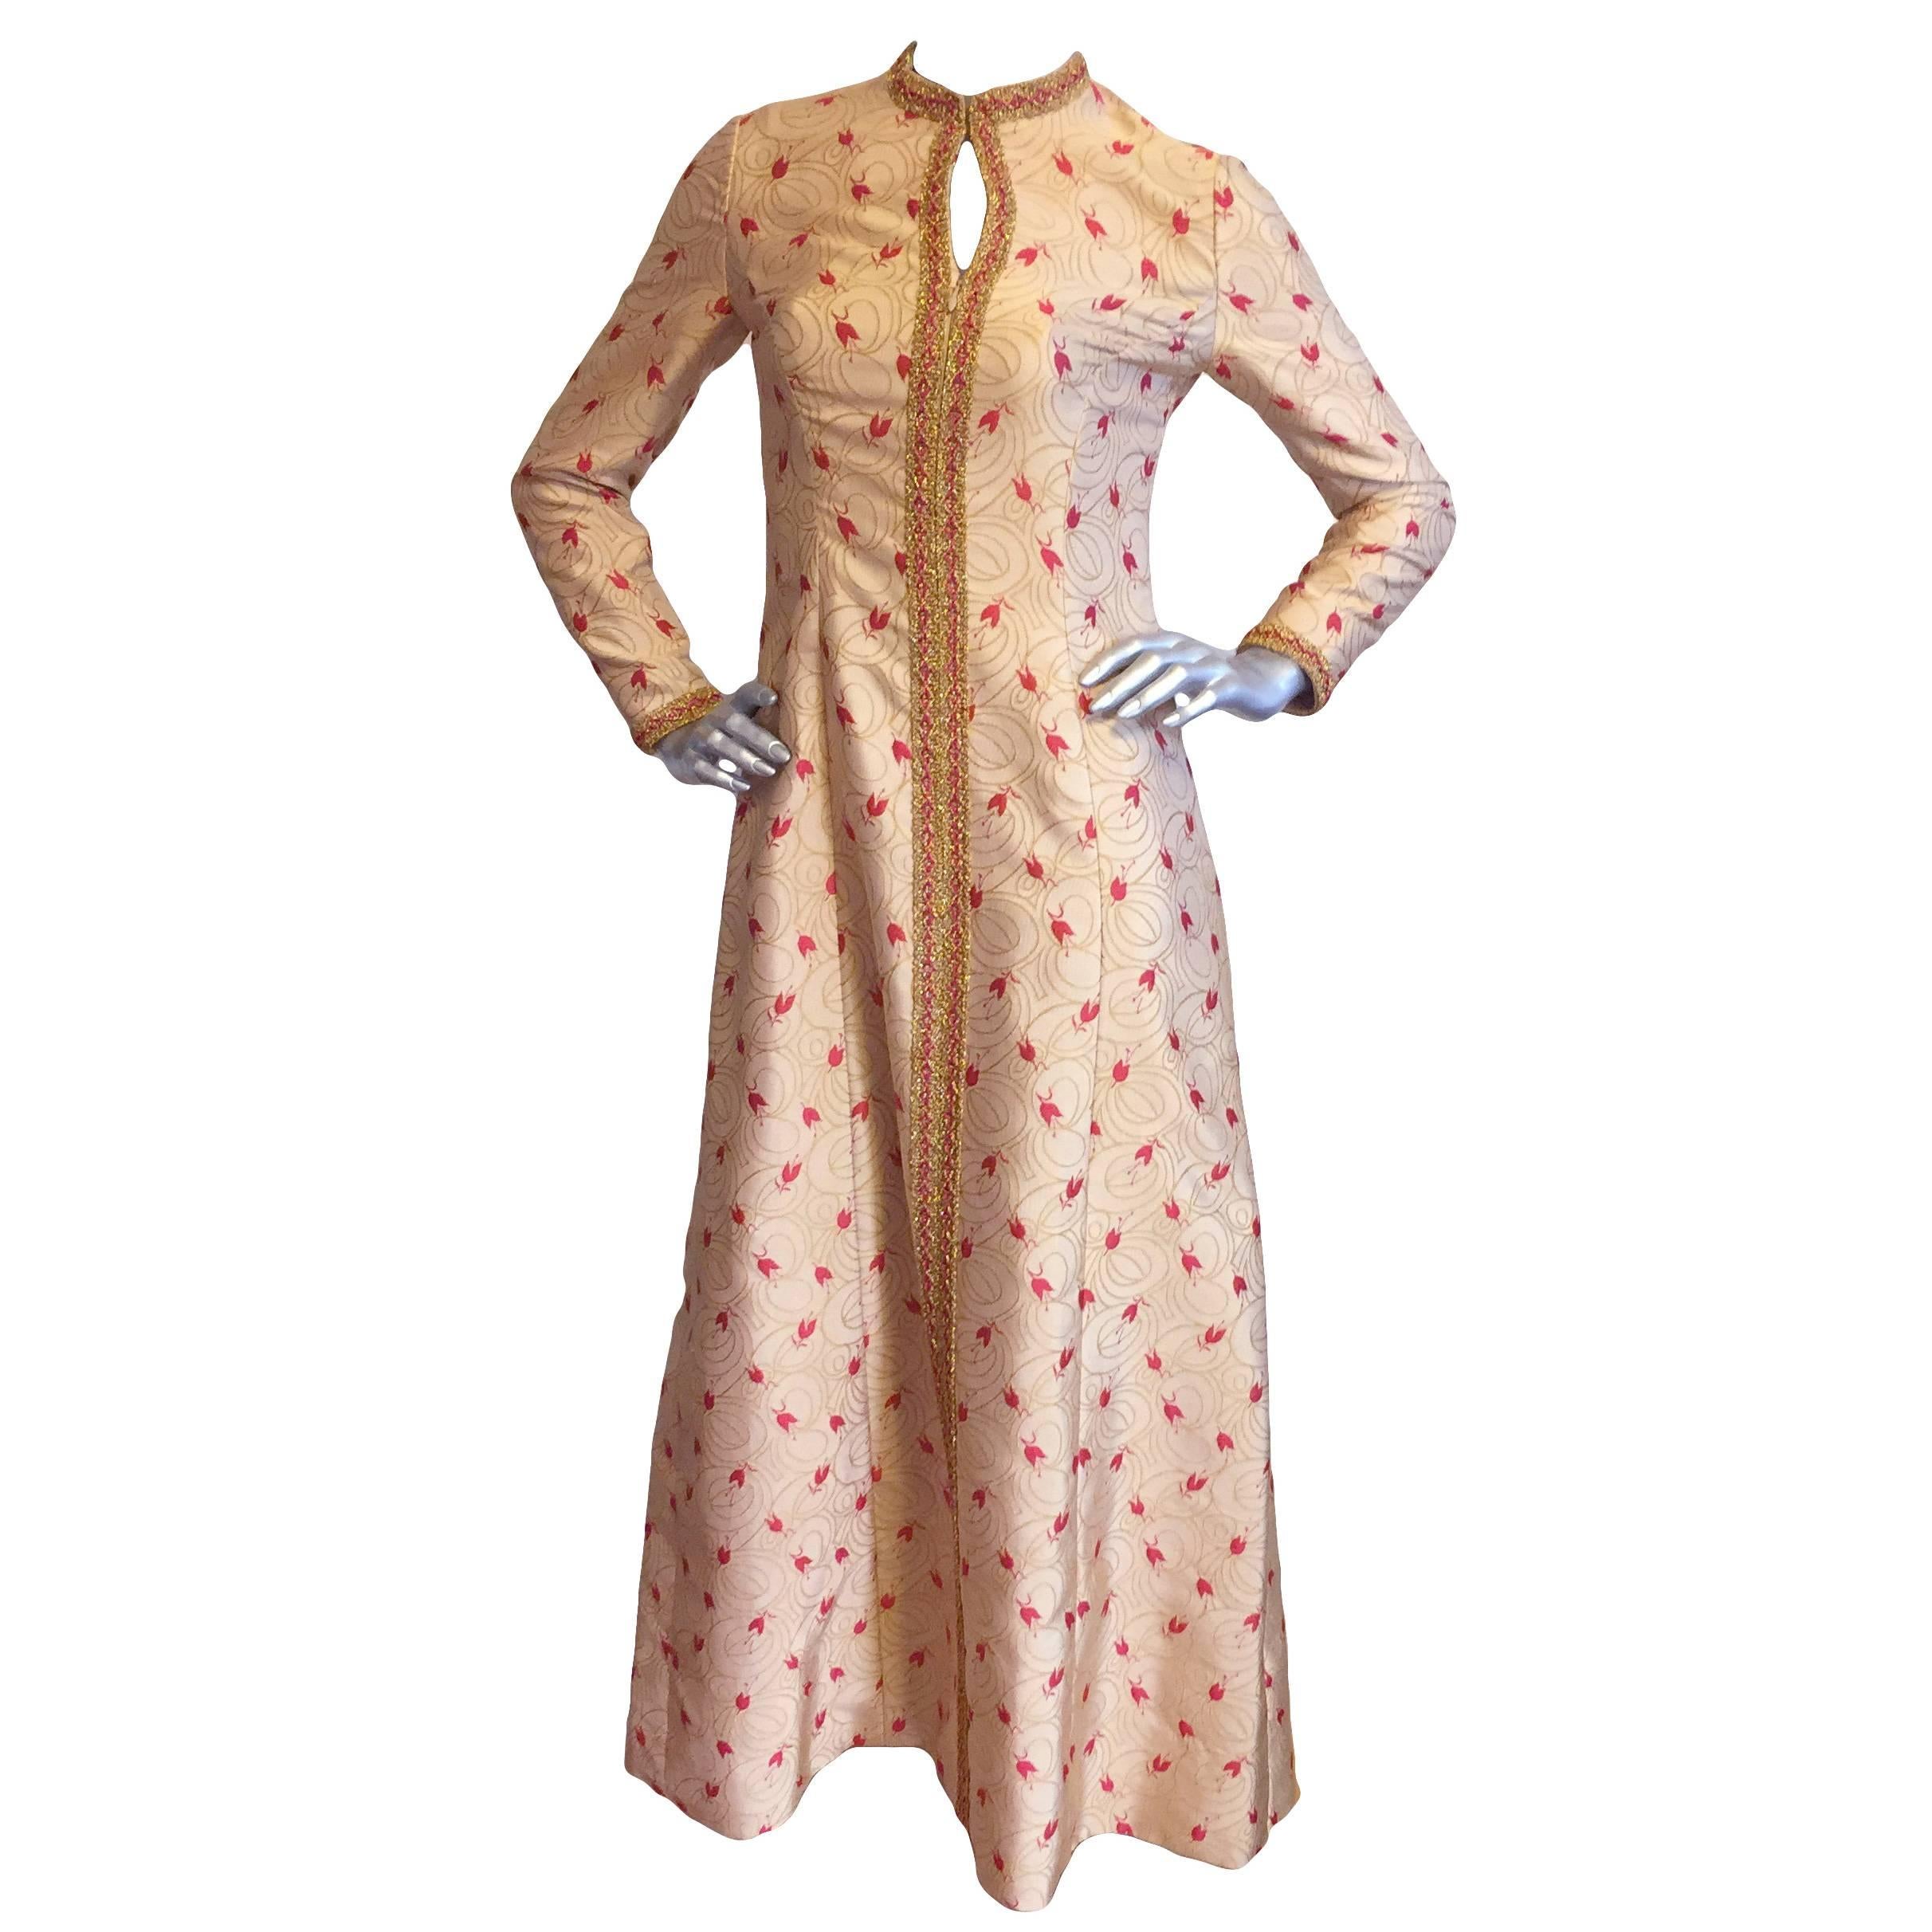 Rare Adele Simpson Brocade Gown, Circa 1960 For Sale